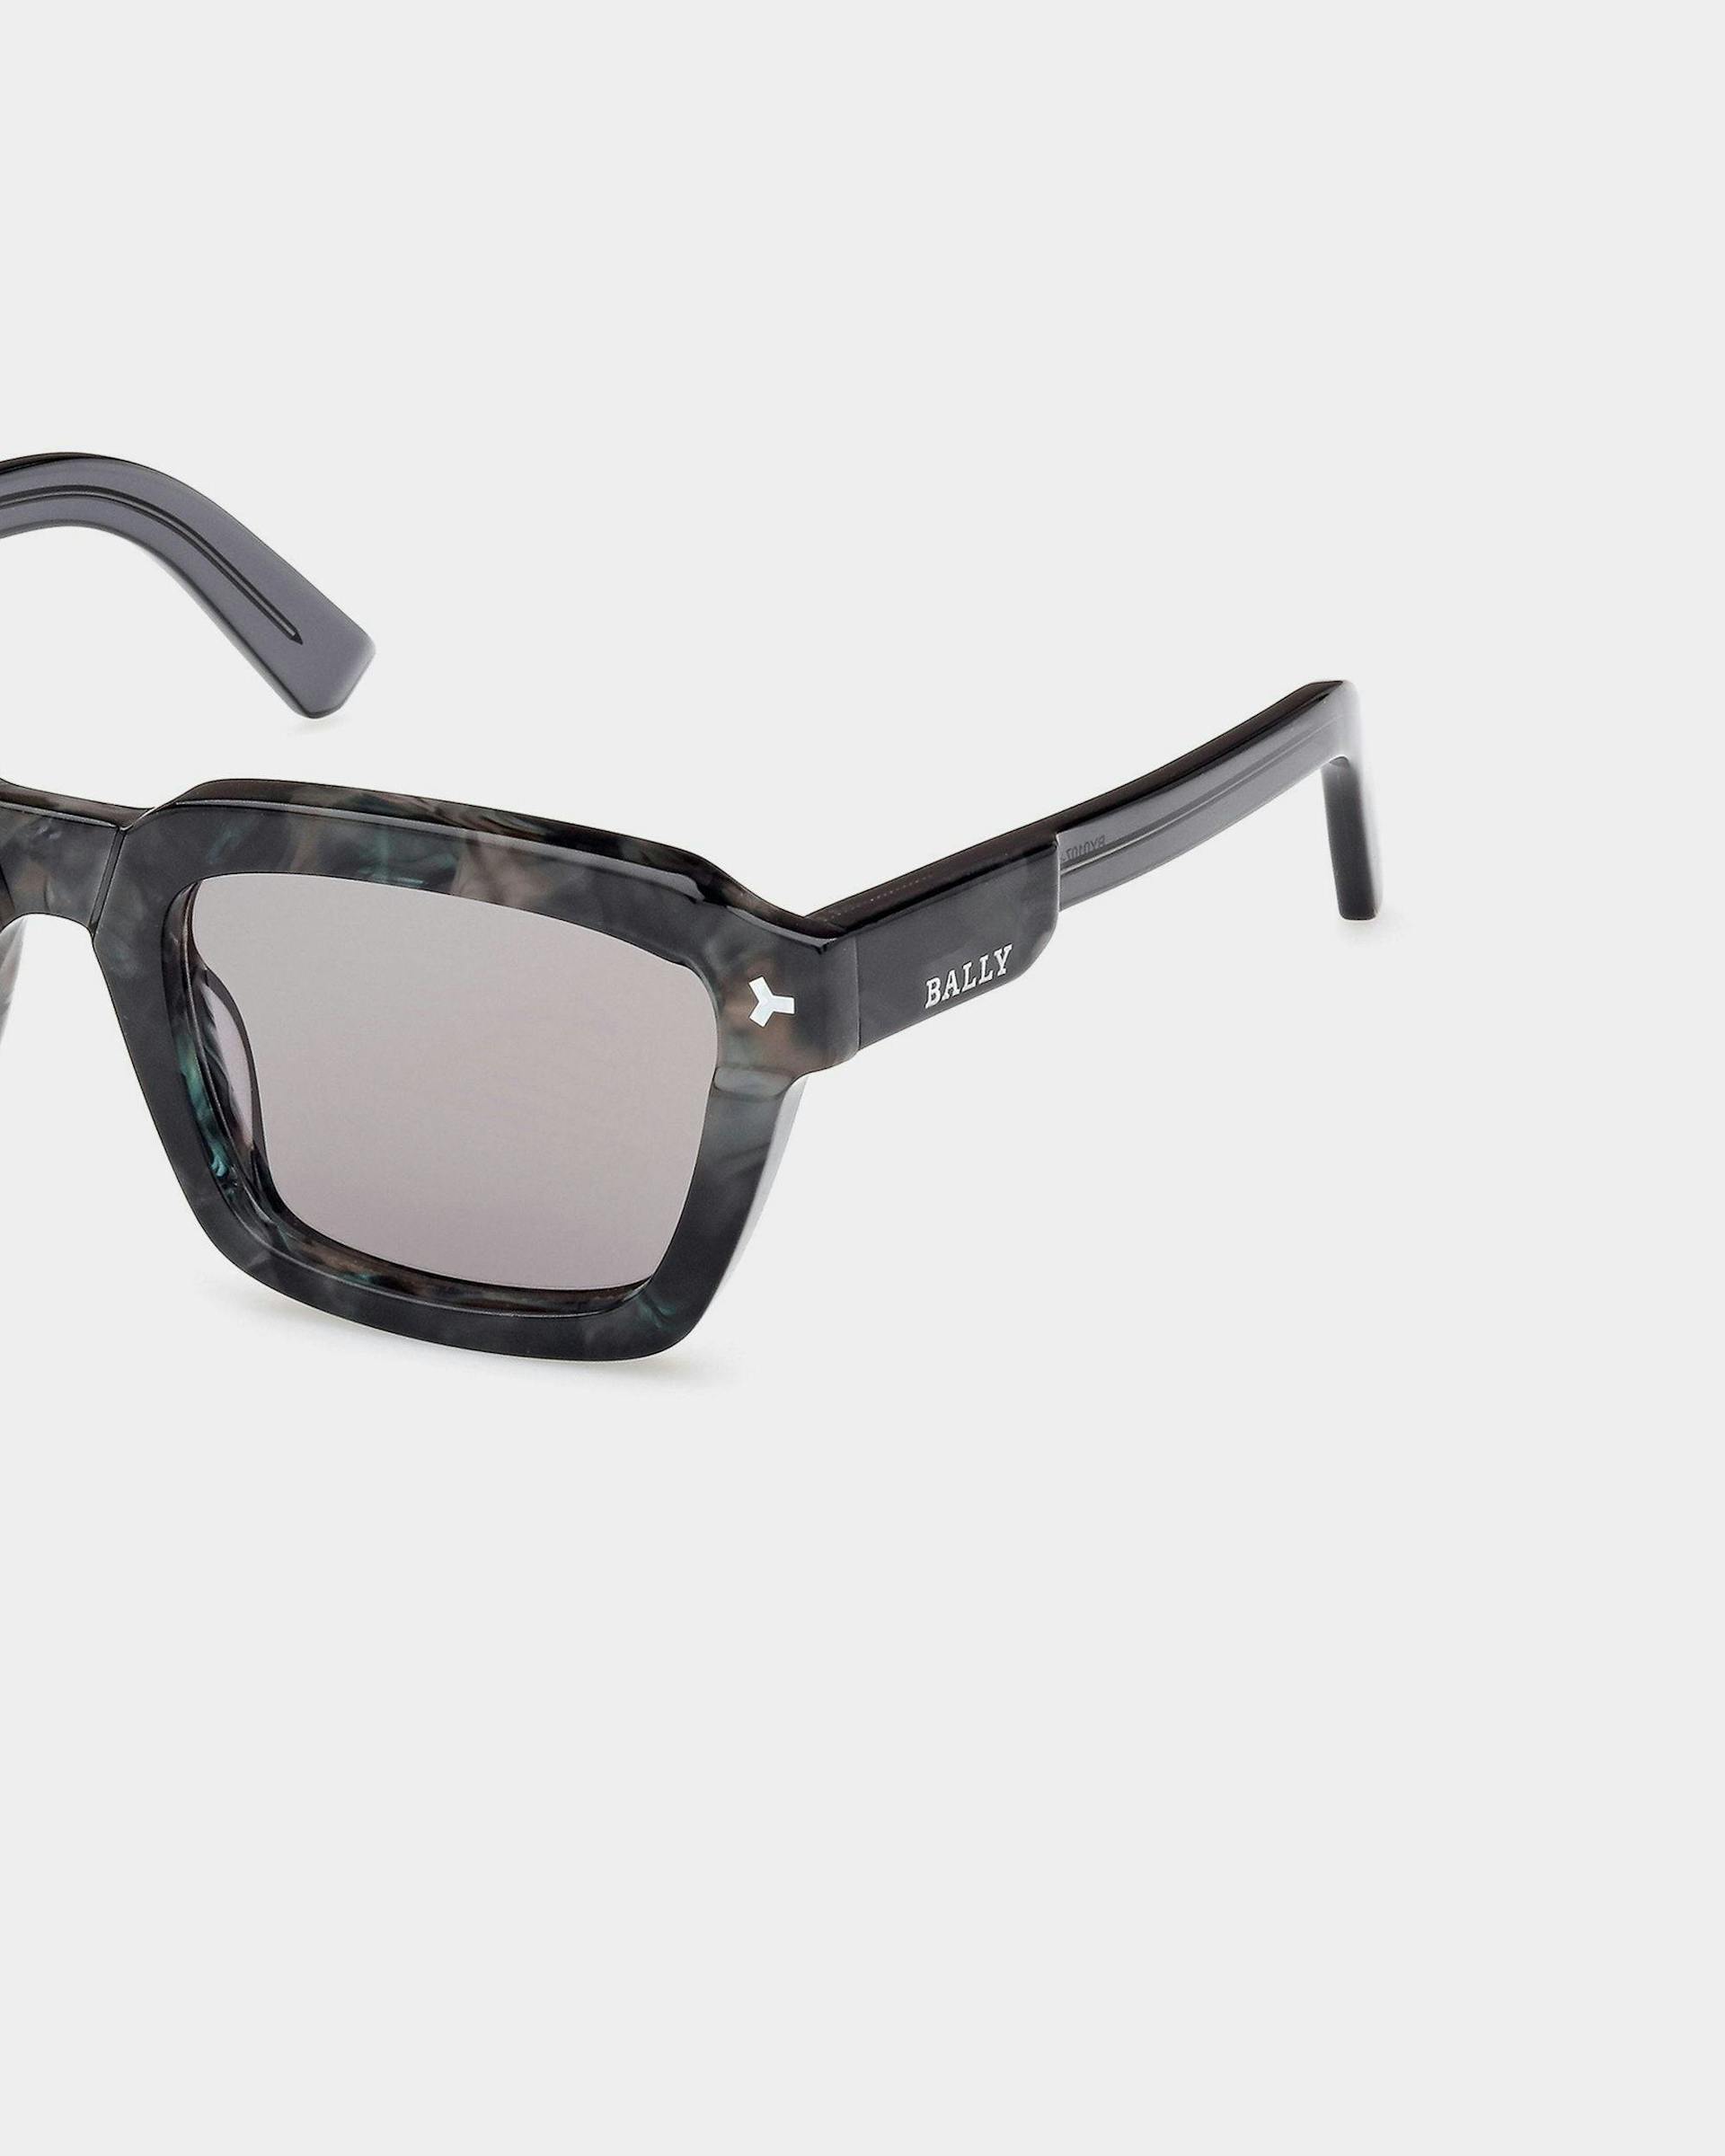 Nicholas Rectangular Full Rim Sunglasses In Black And Gray - Men's - Bally - 04